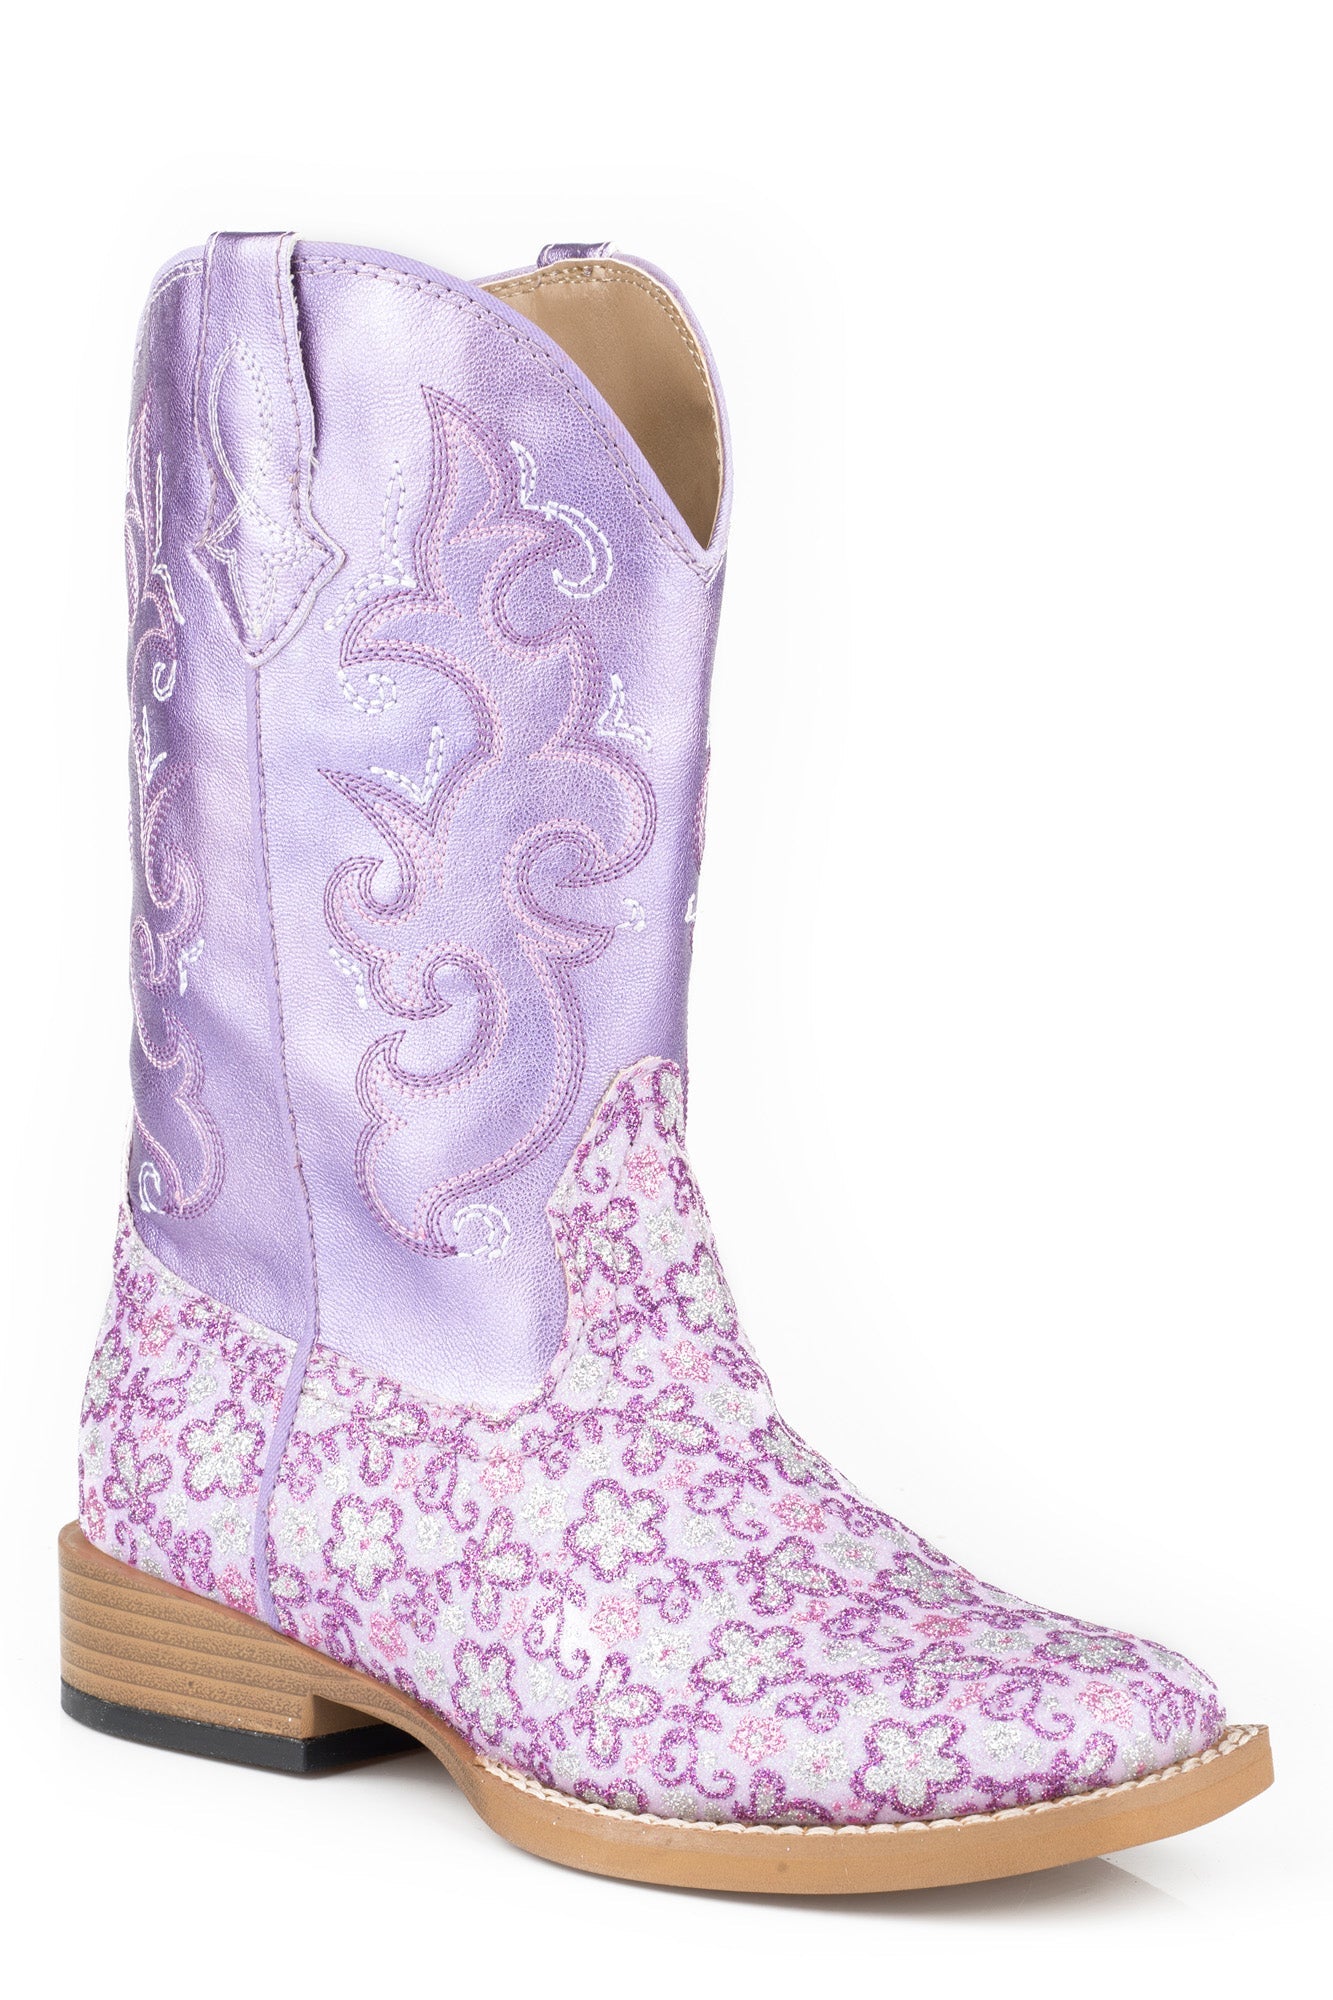 purple glitter boots